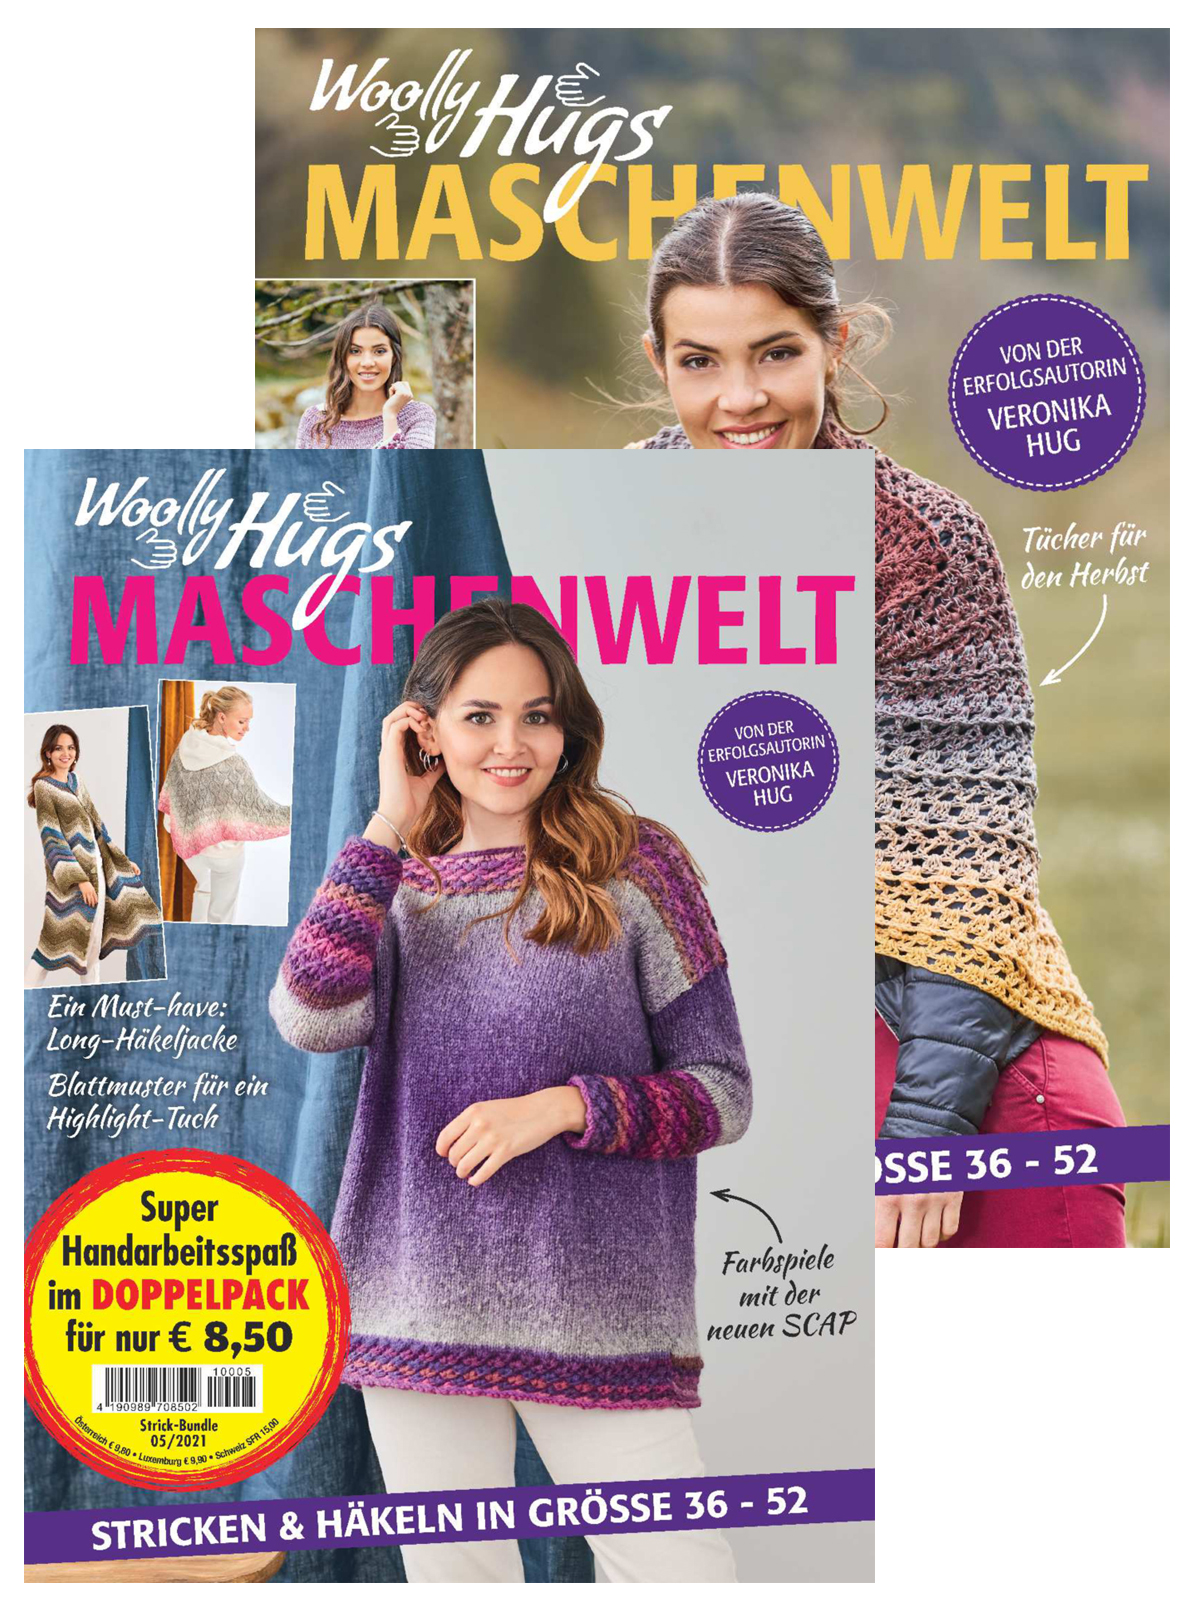 Zwei Zeitschriften - Woolly Hugs 120024 - 21 006 + 20 006